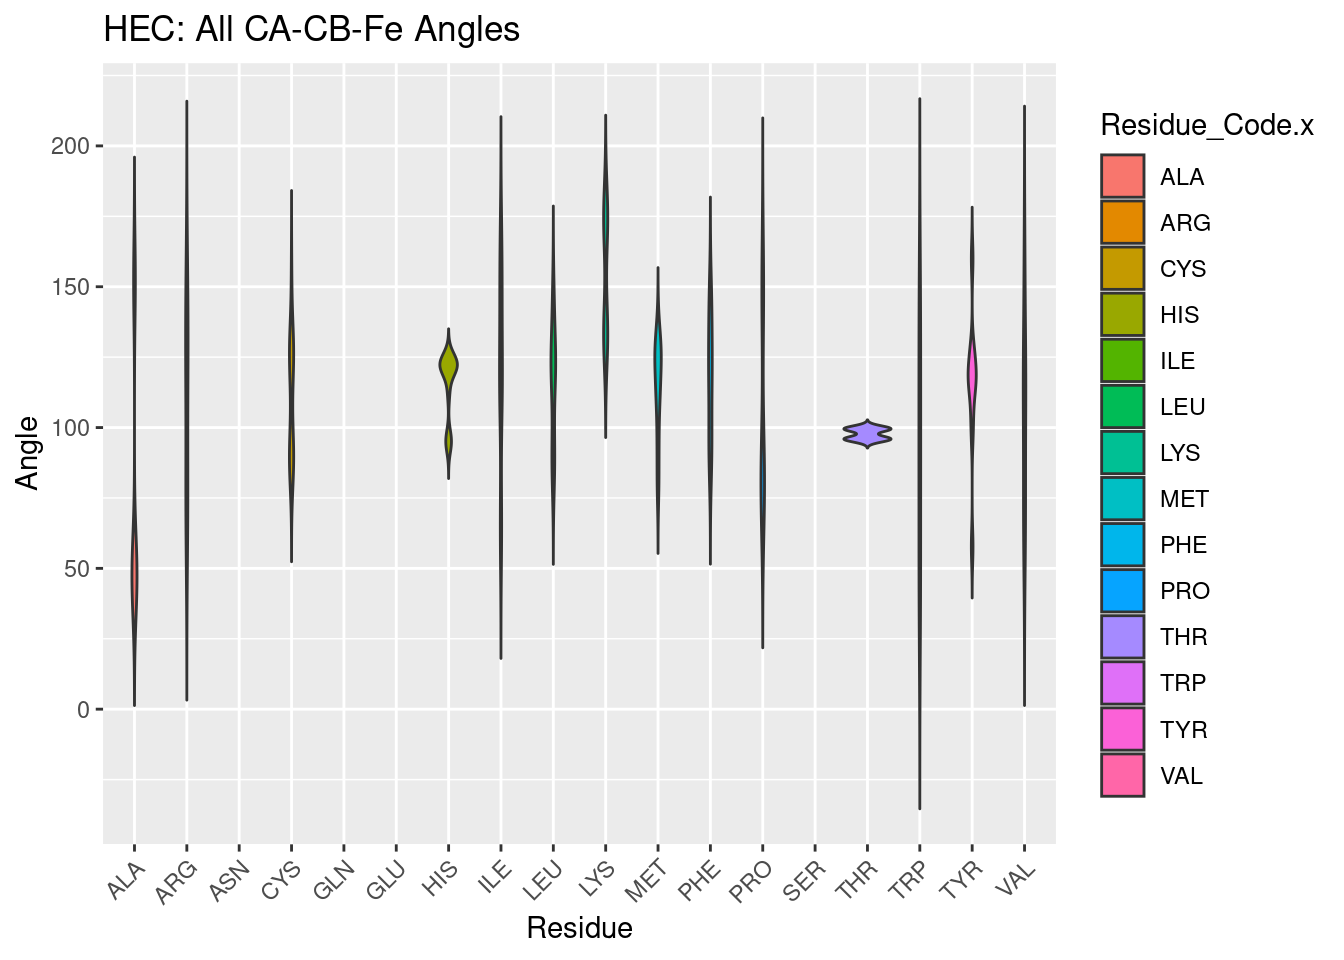 HEC: All CA-CB-Fe Angles